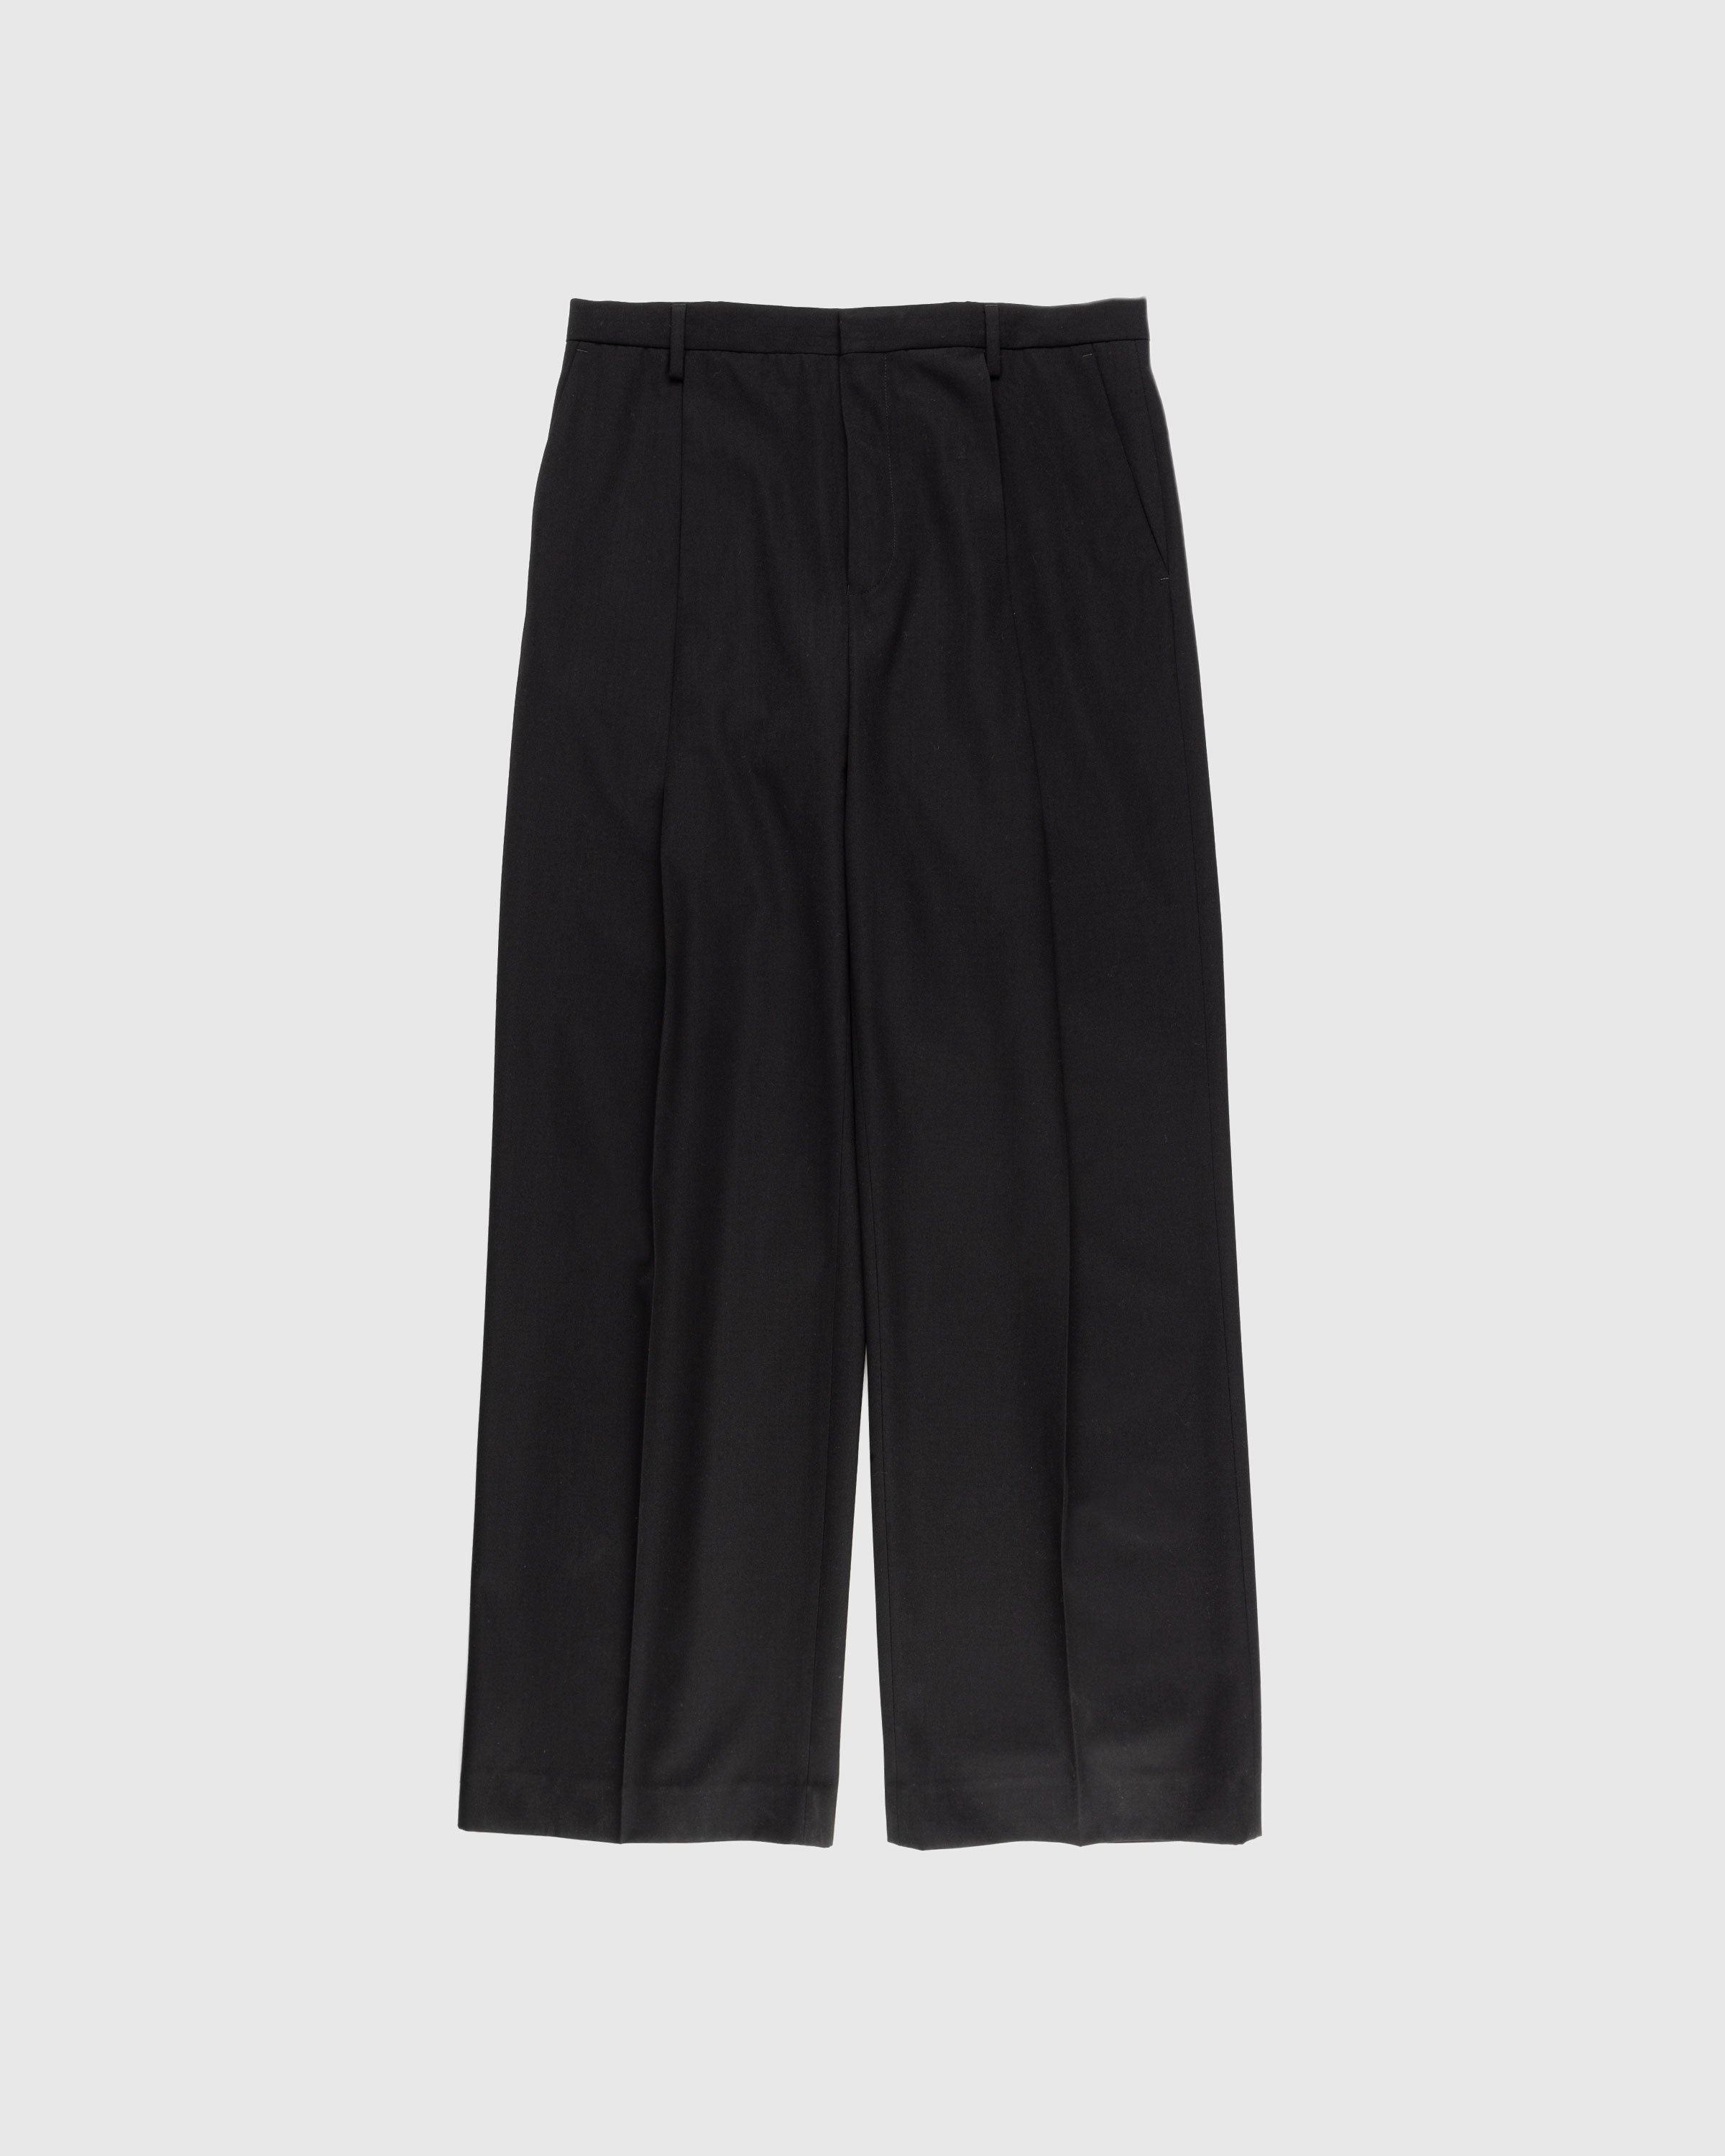 Dries van Noten - Parton Pleated Pants Black - Clothing - Black - Image 1